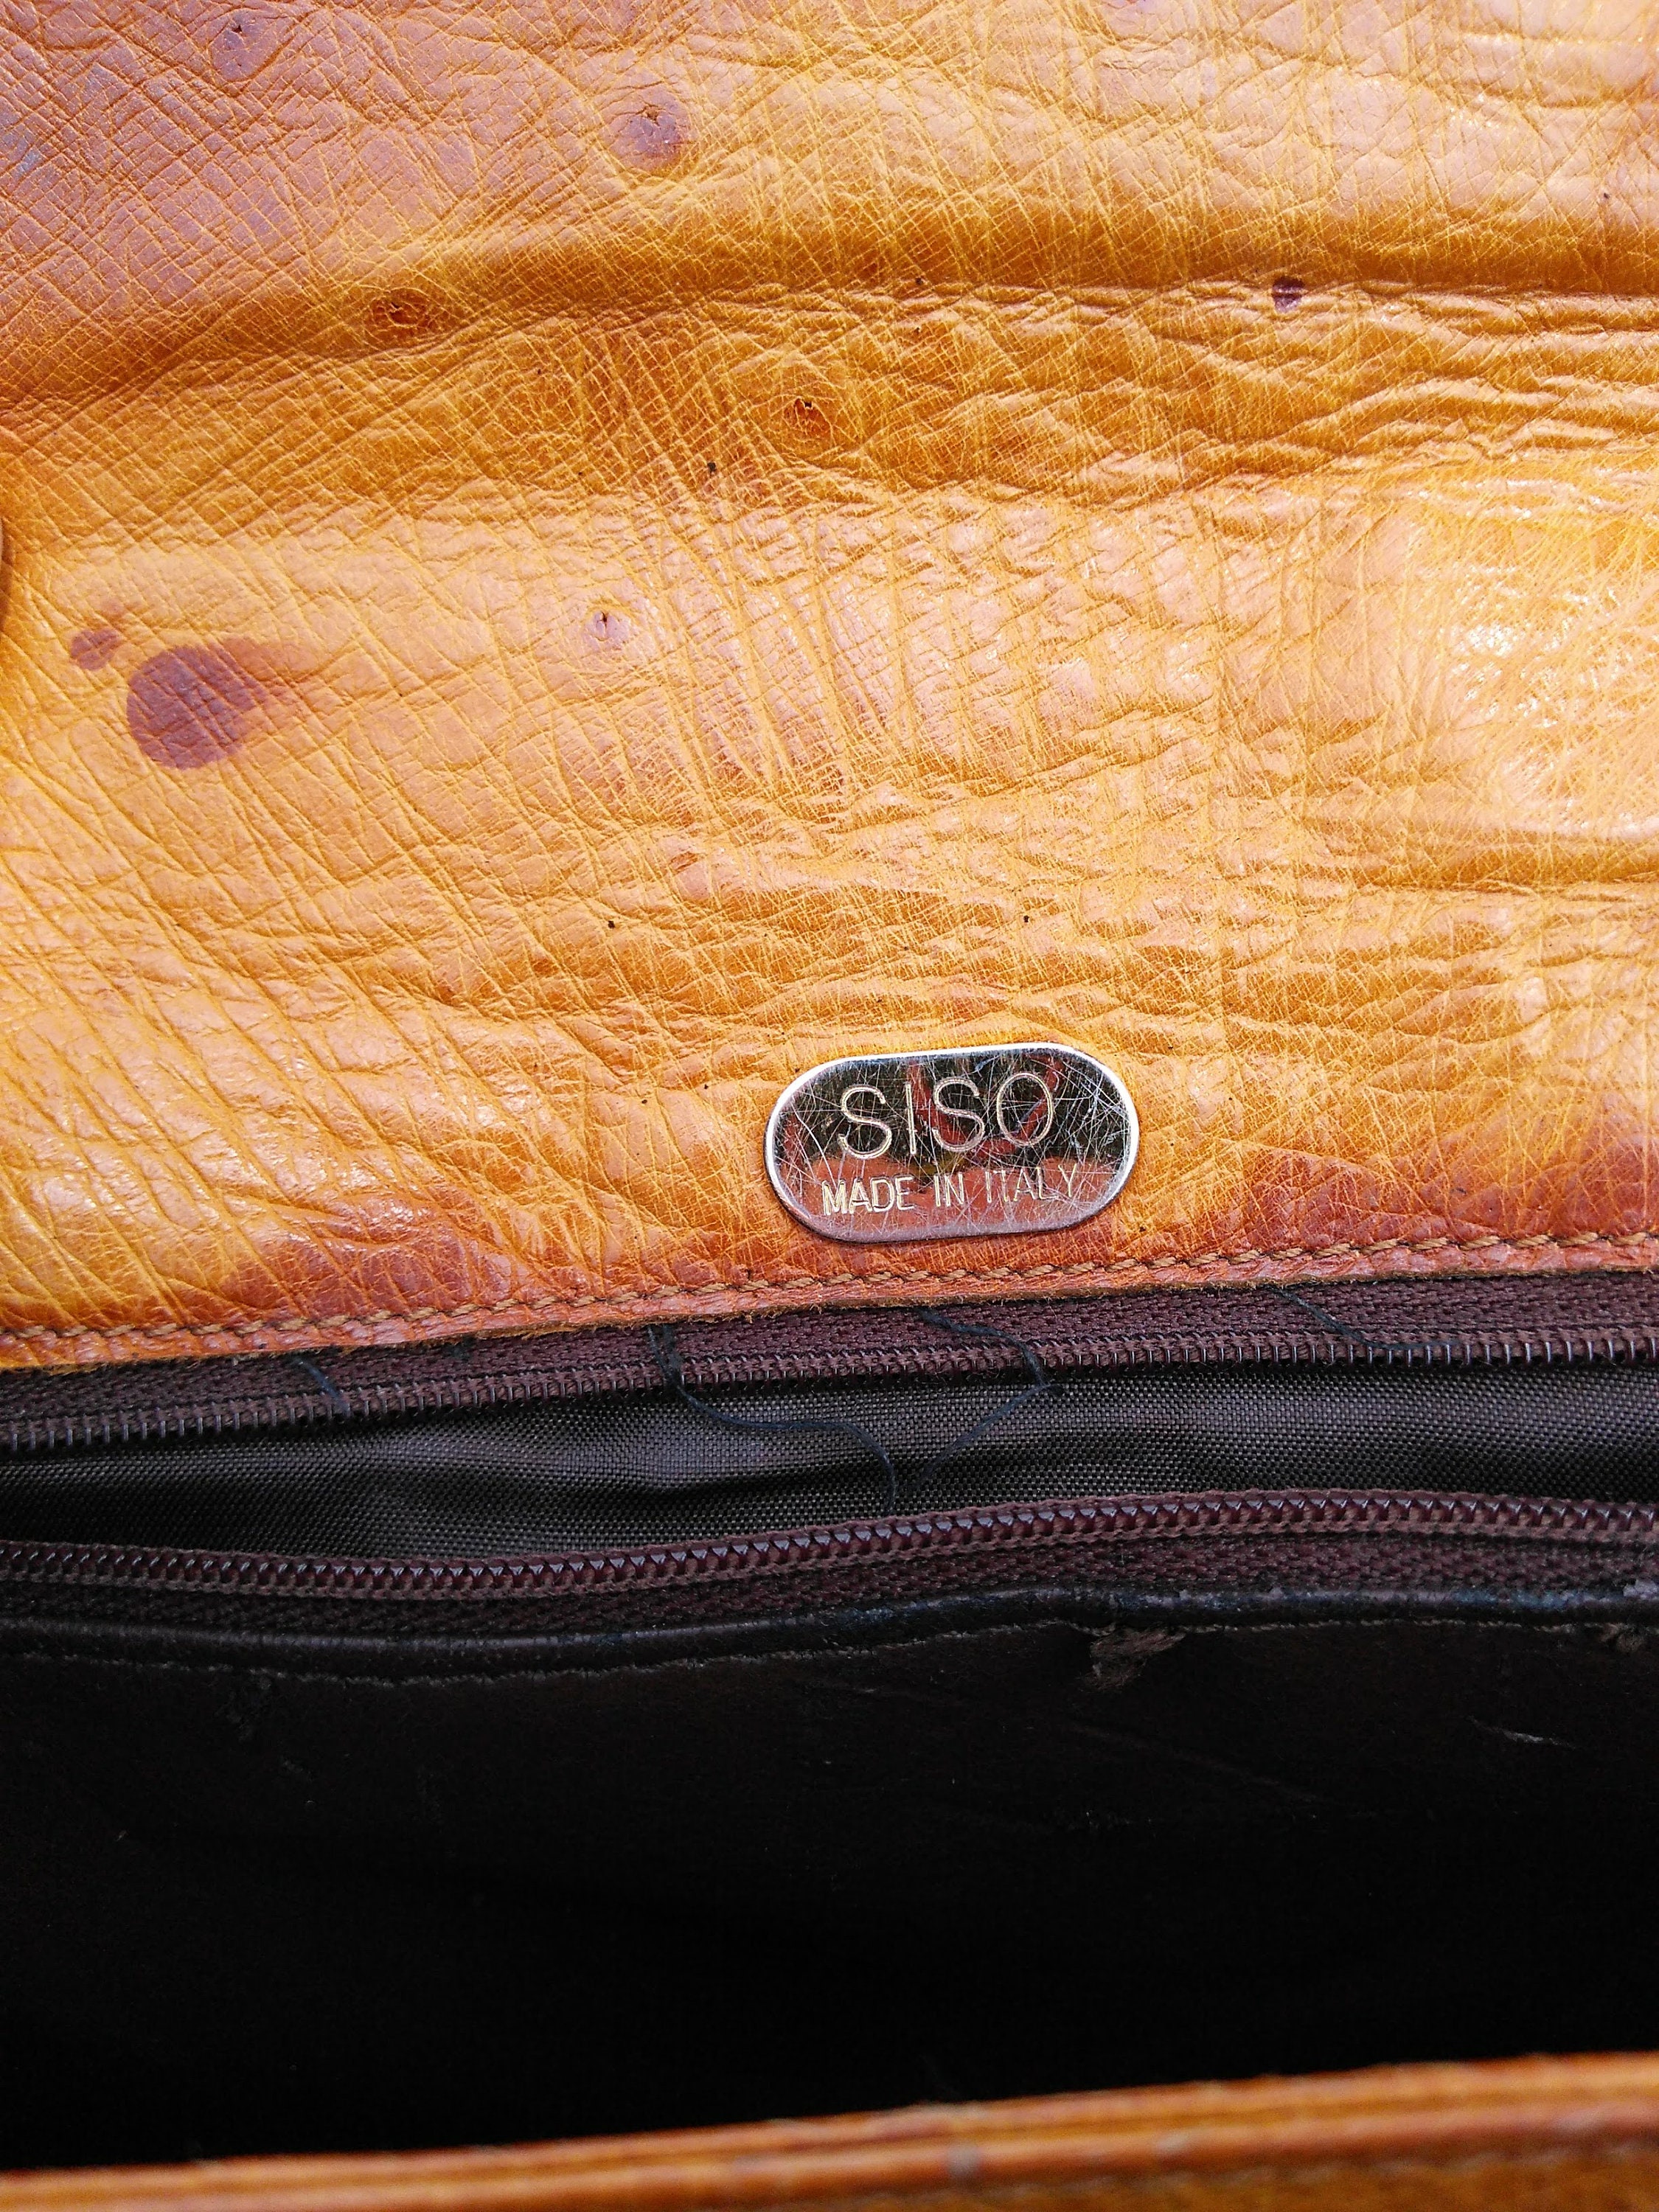 Siris (biscuit) - A slim, fashionable leather shoulder bag